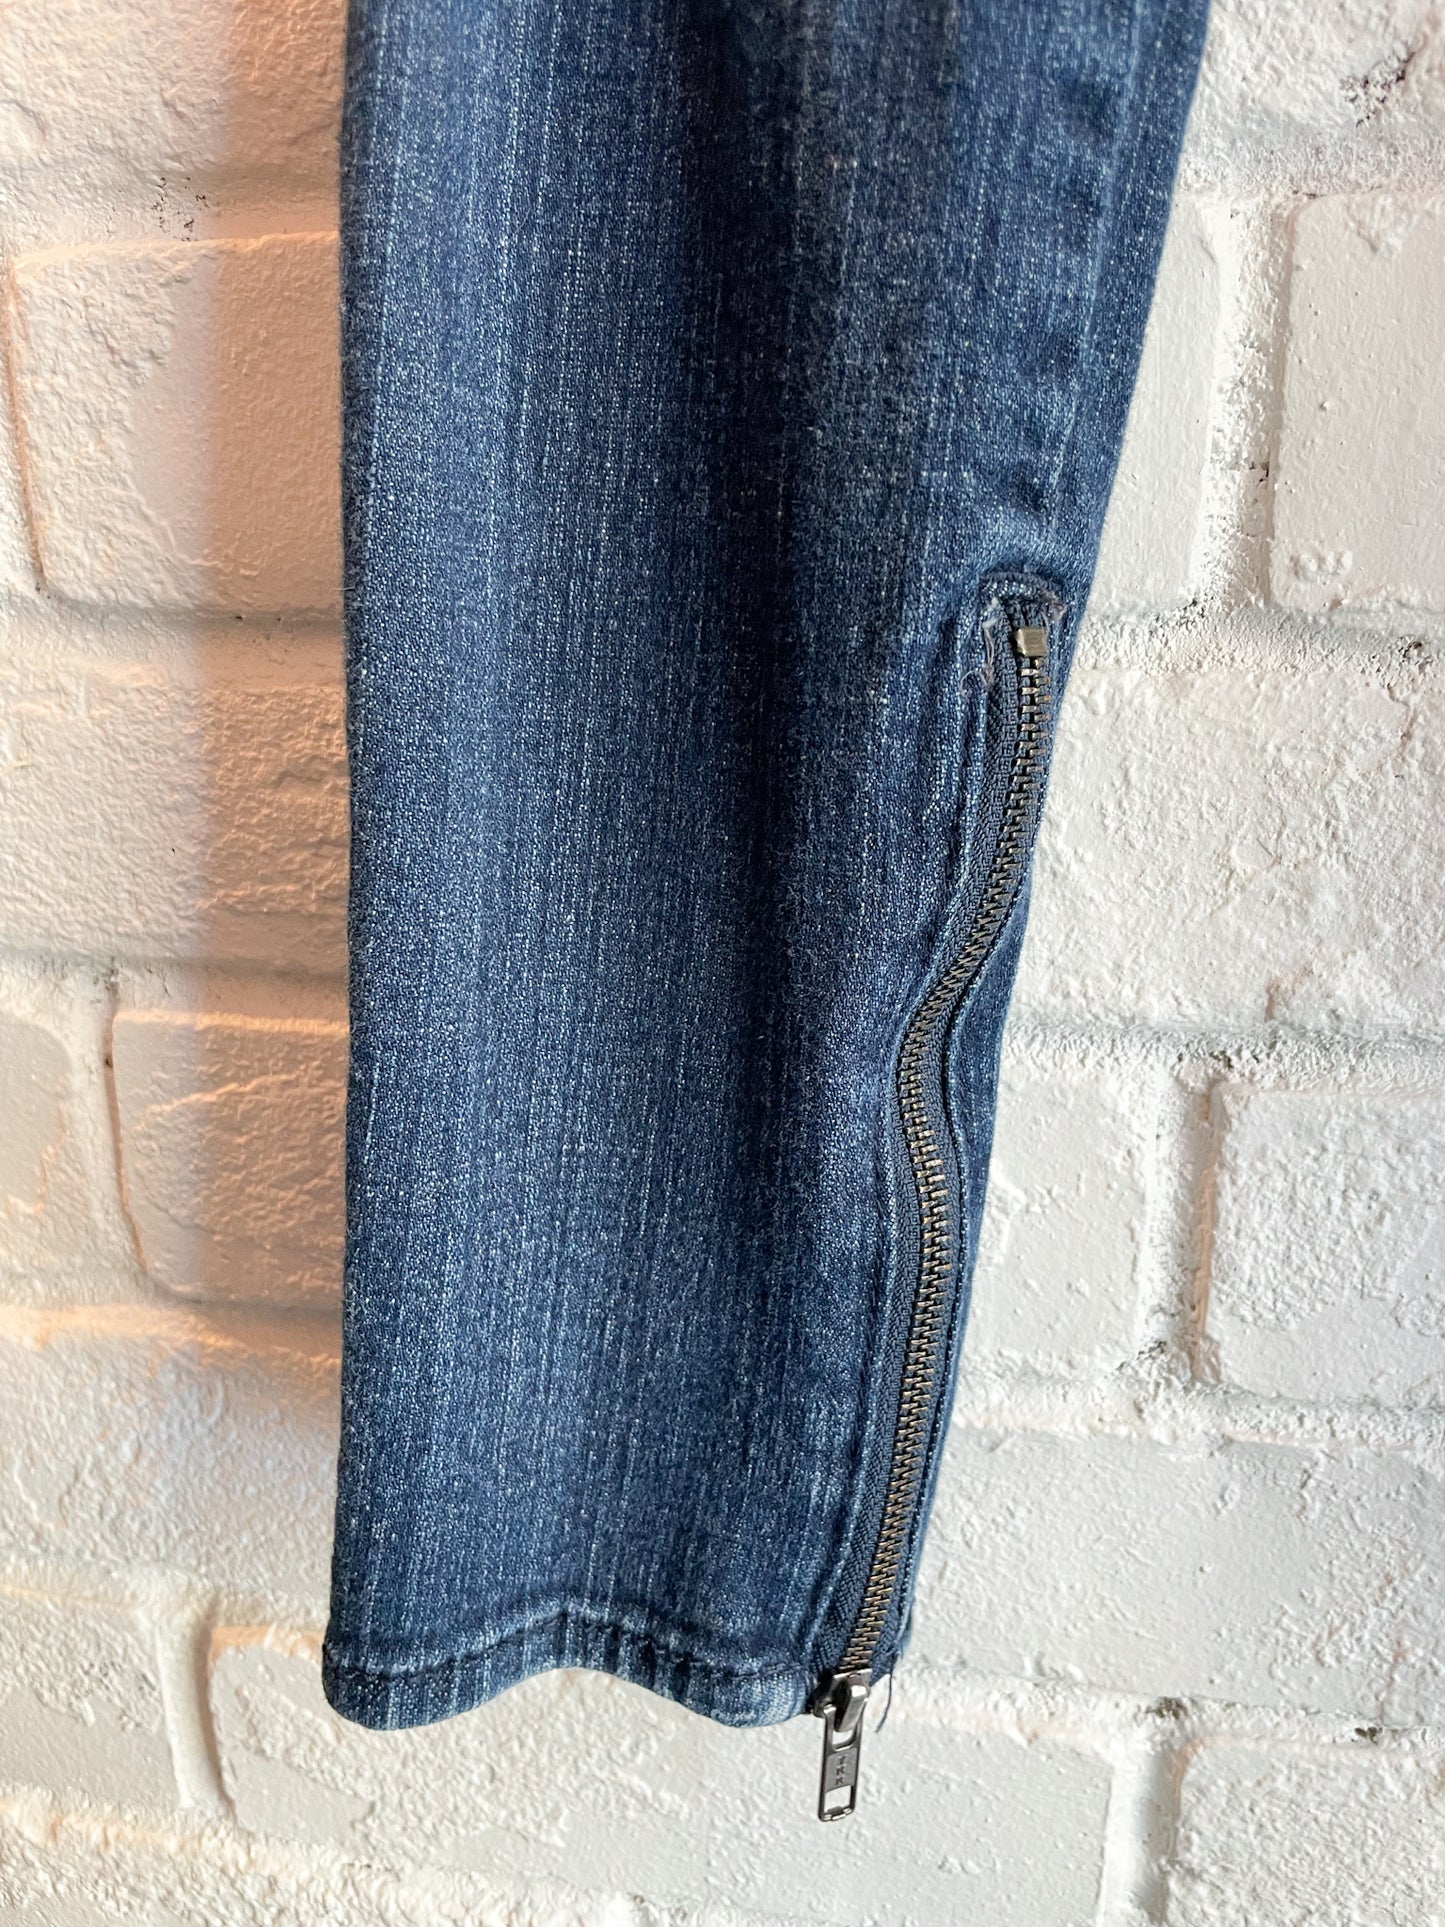 Jessica Simpson Dark Wash Zipper Split Hem Jeans  - Size 25/26